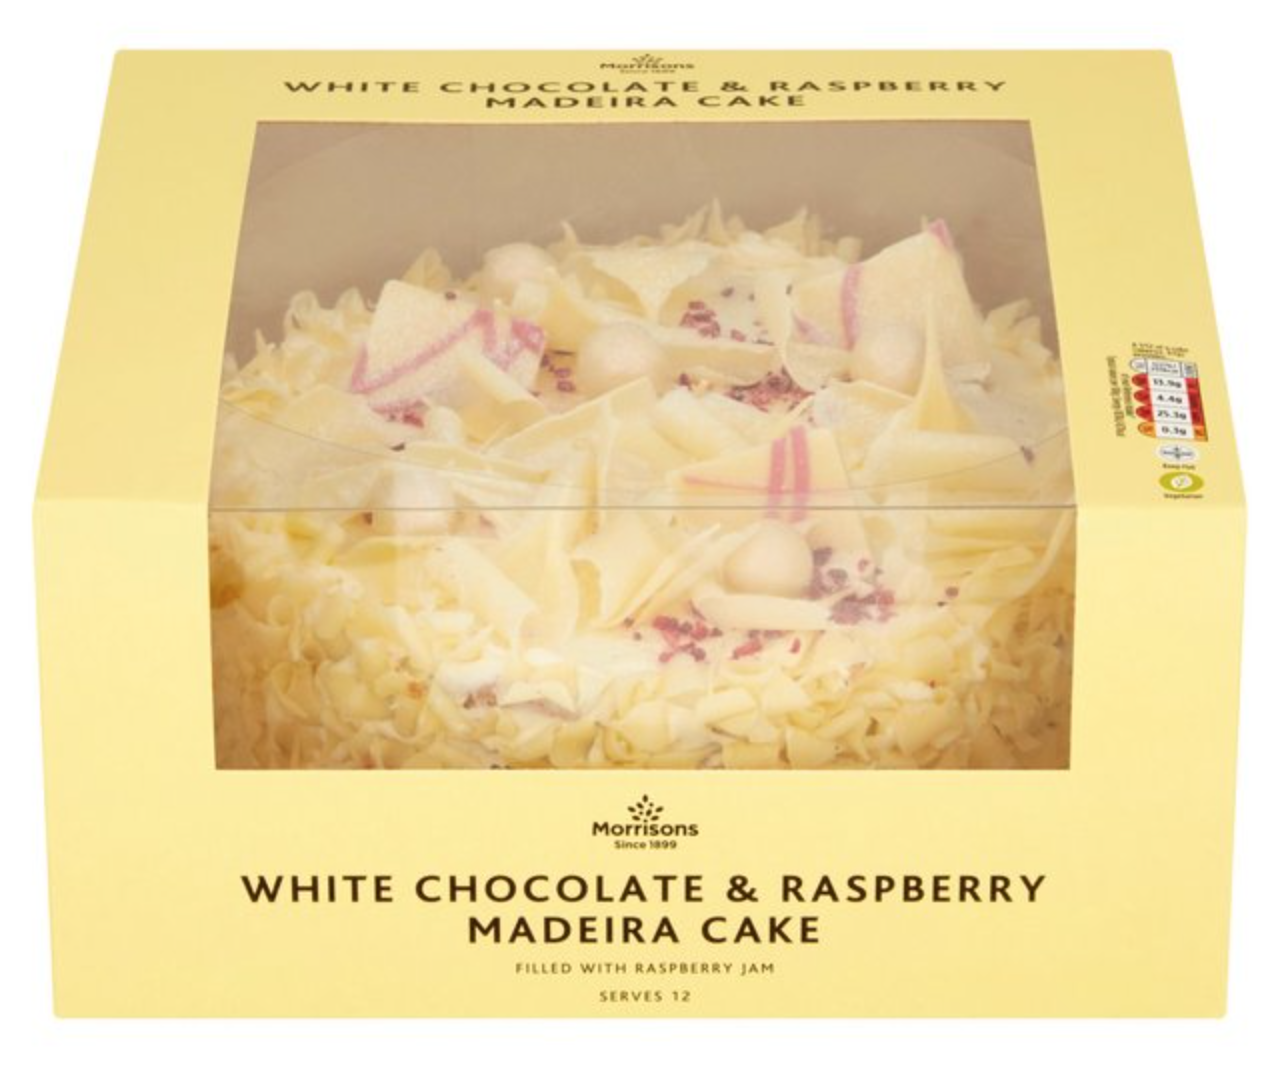 MORRISONS white chocolate and raspberry cake